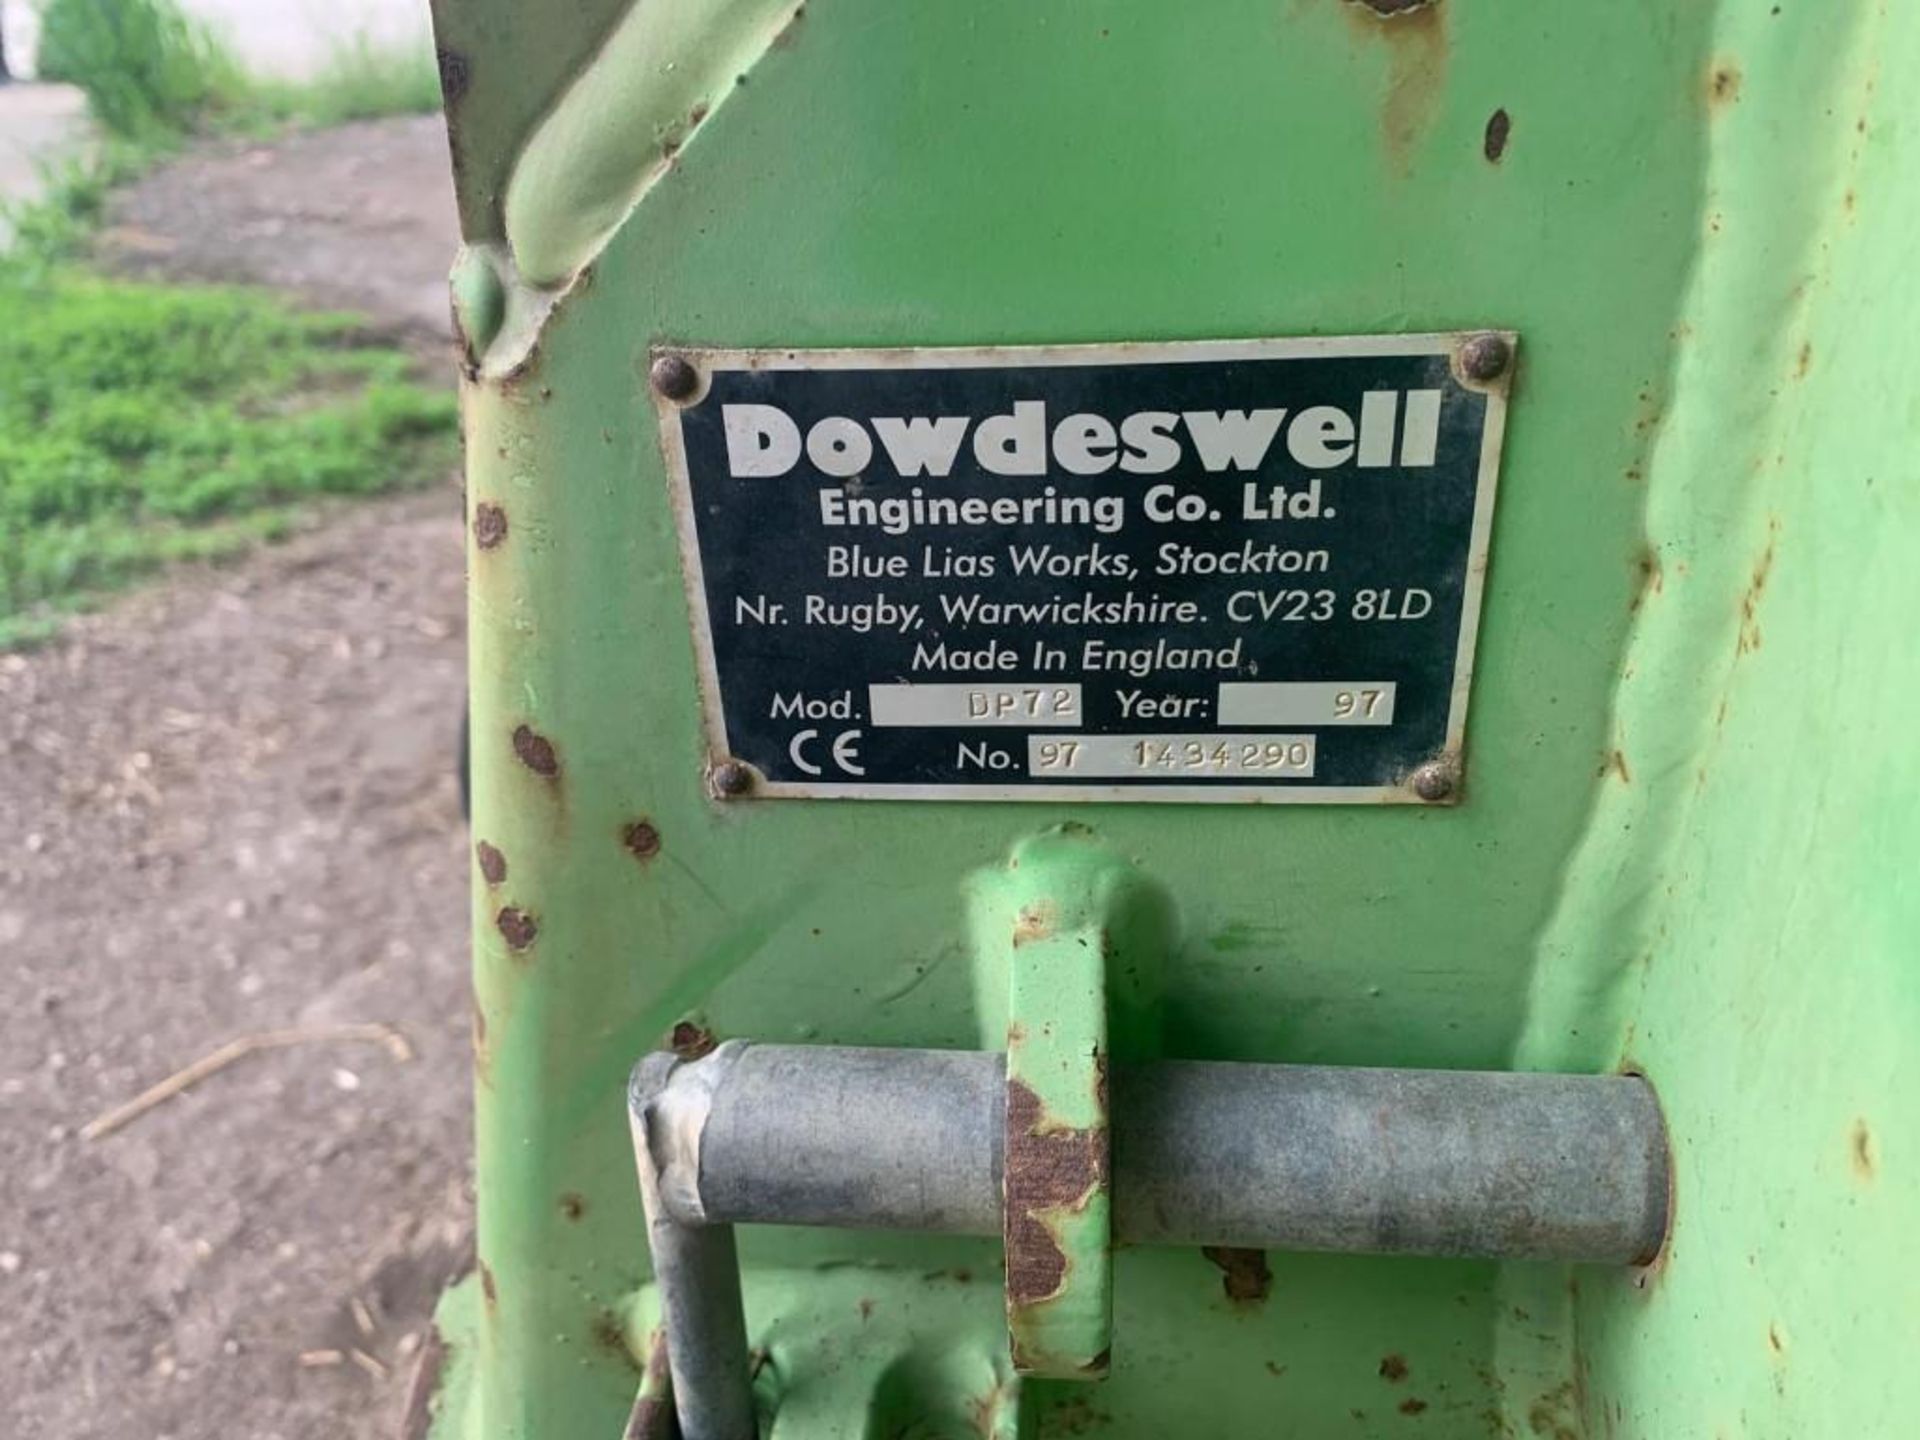 1997 Dowdeswell DP7 5 furrow reversible plough - Image 3 of 4